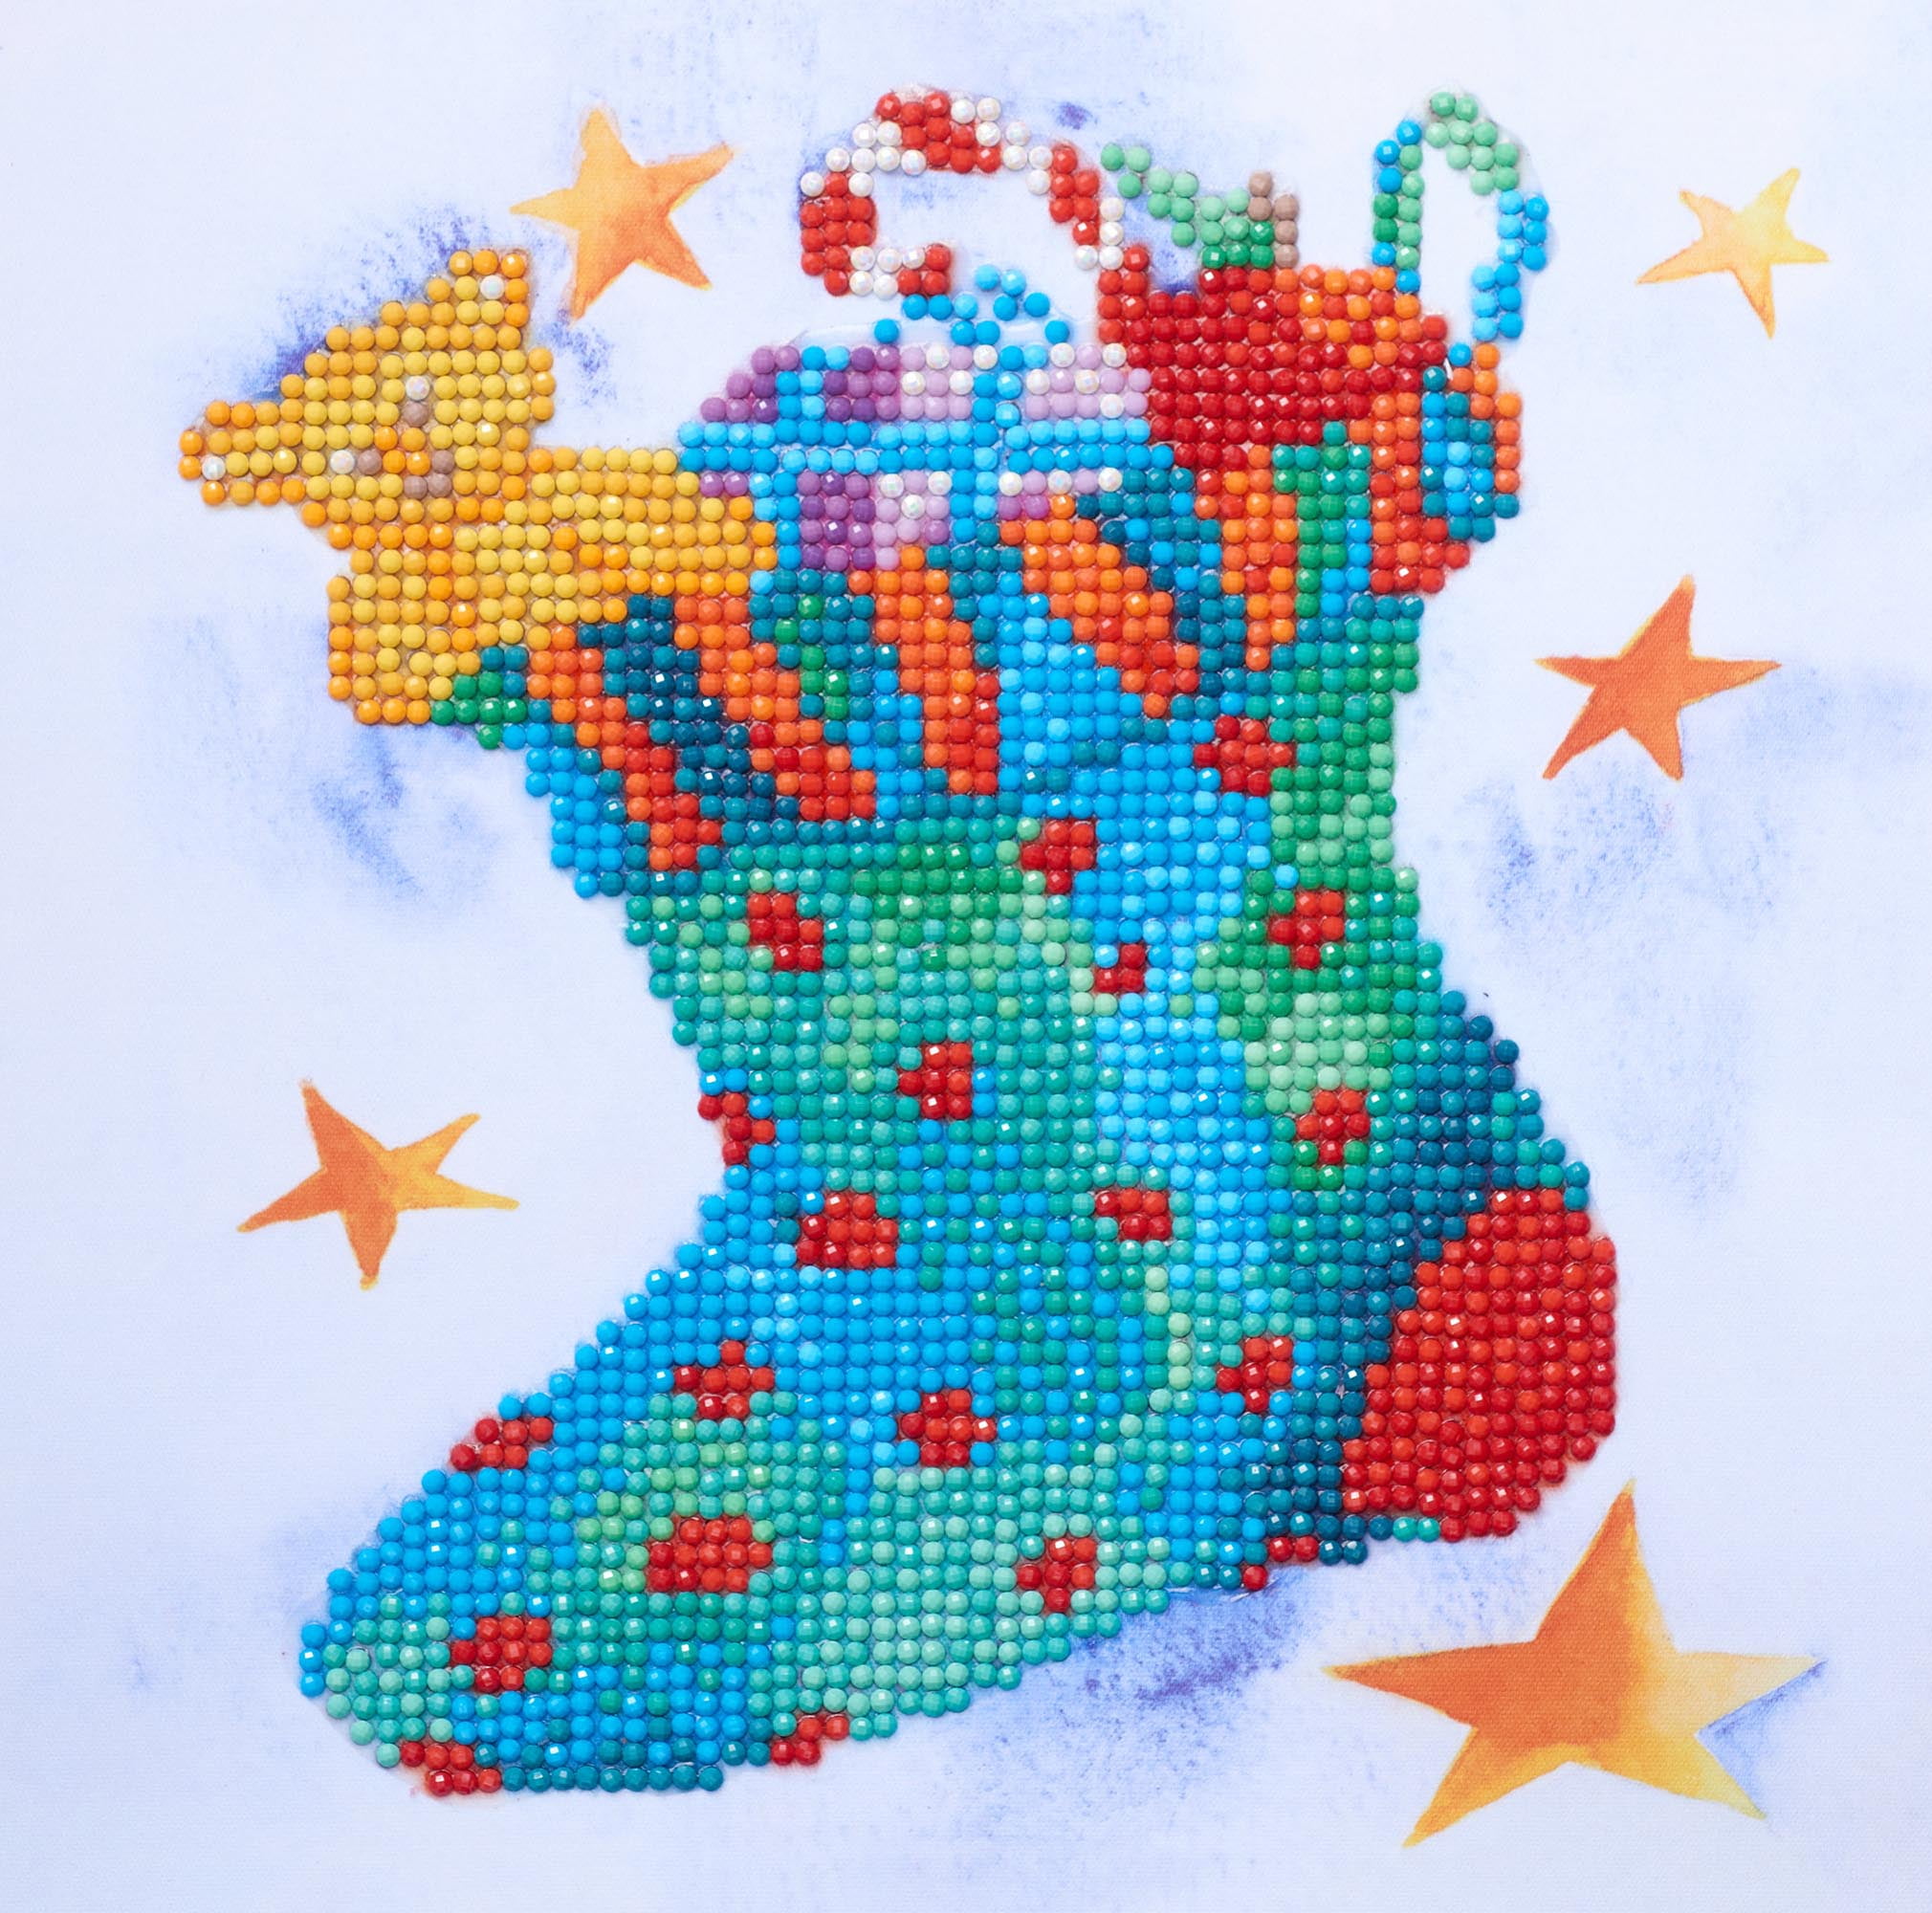 SDJMa Merry Christmas Diamond Art Painting Kits for Adults - Santa Snowman Diamond  Art Kits for Adults Beginners, DIY Full Drill 5D Diamond Dots Paintings  with Diamonds Gem Arts Crafts 12x16inch 